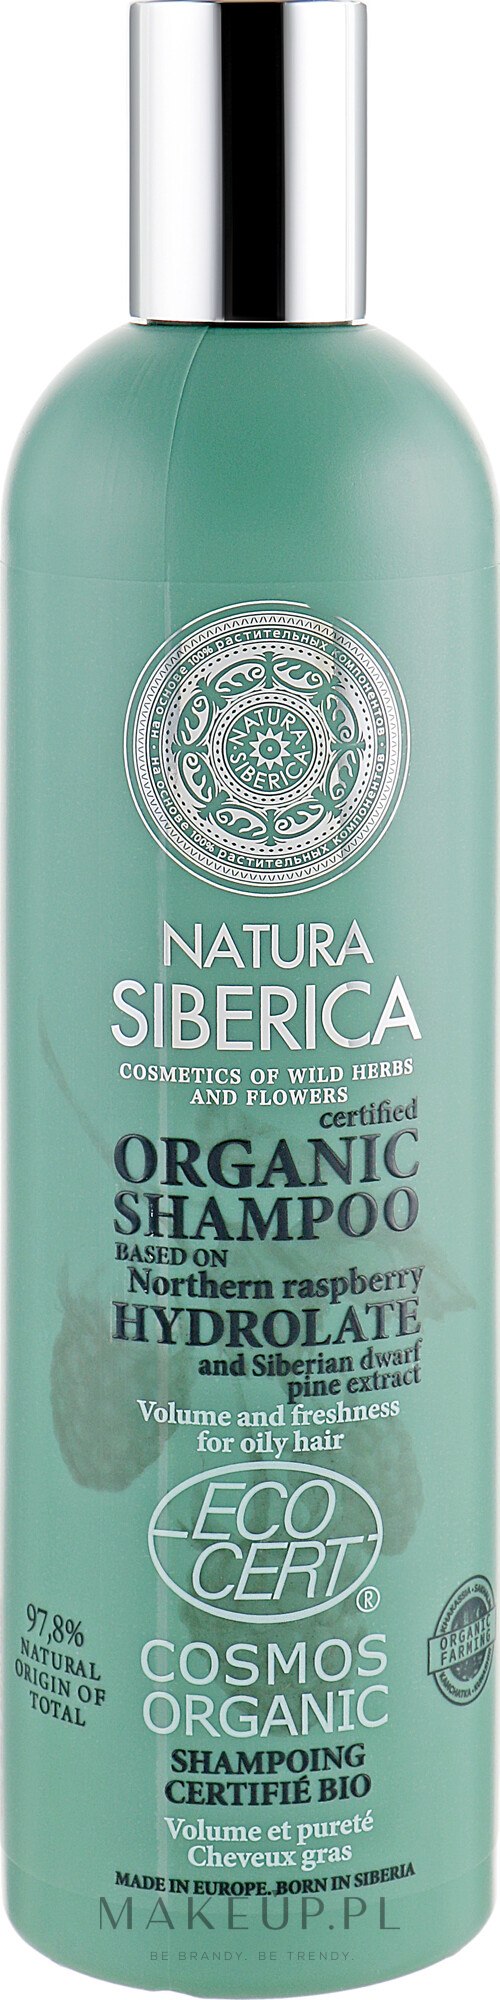 szampon organic opinie